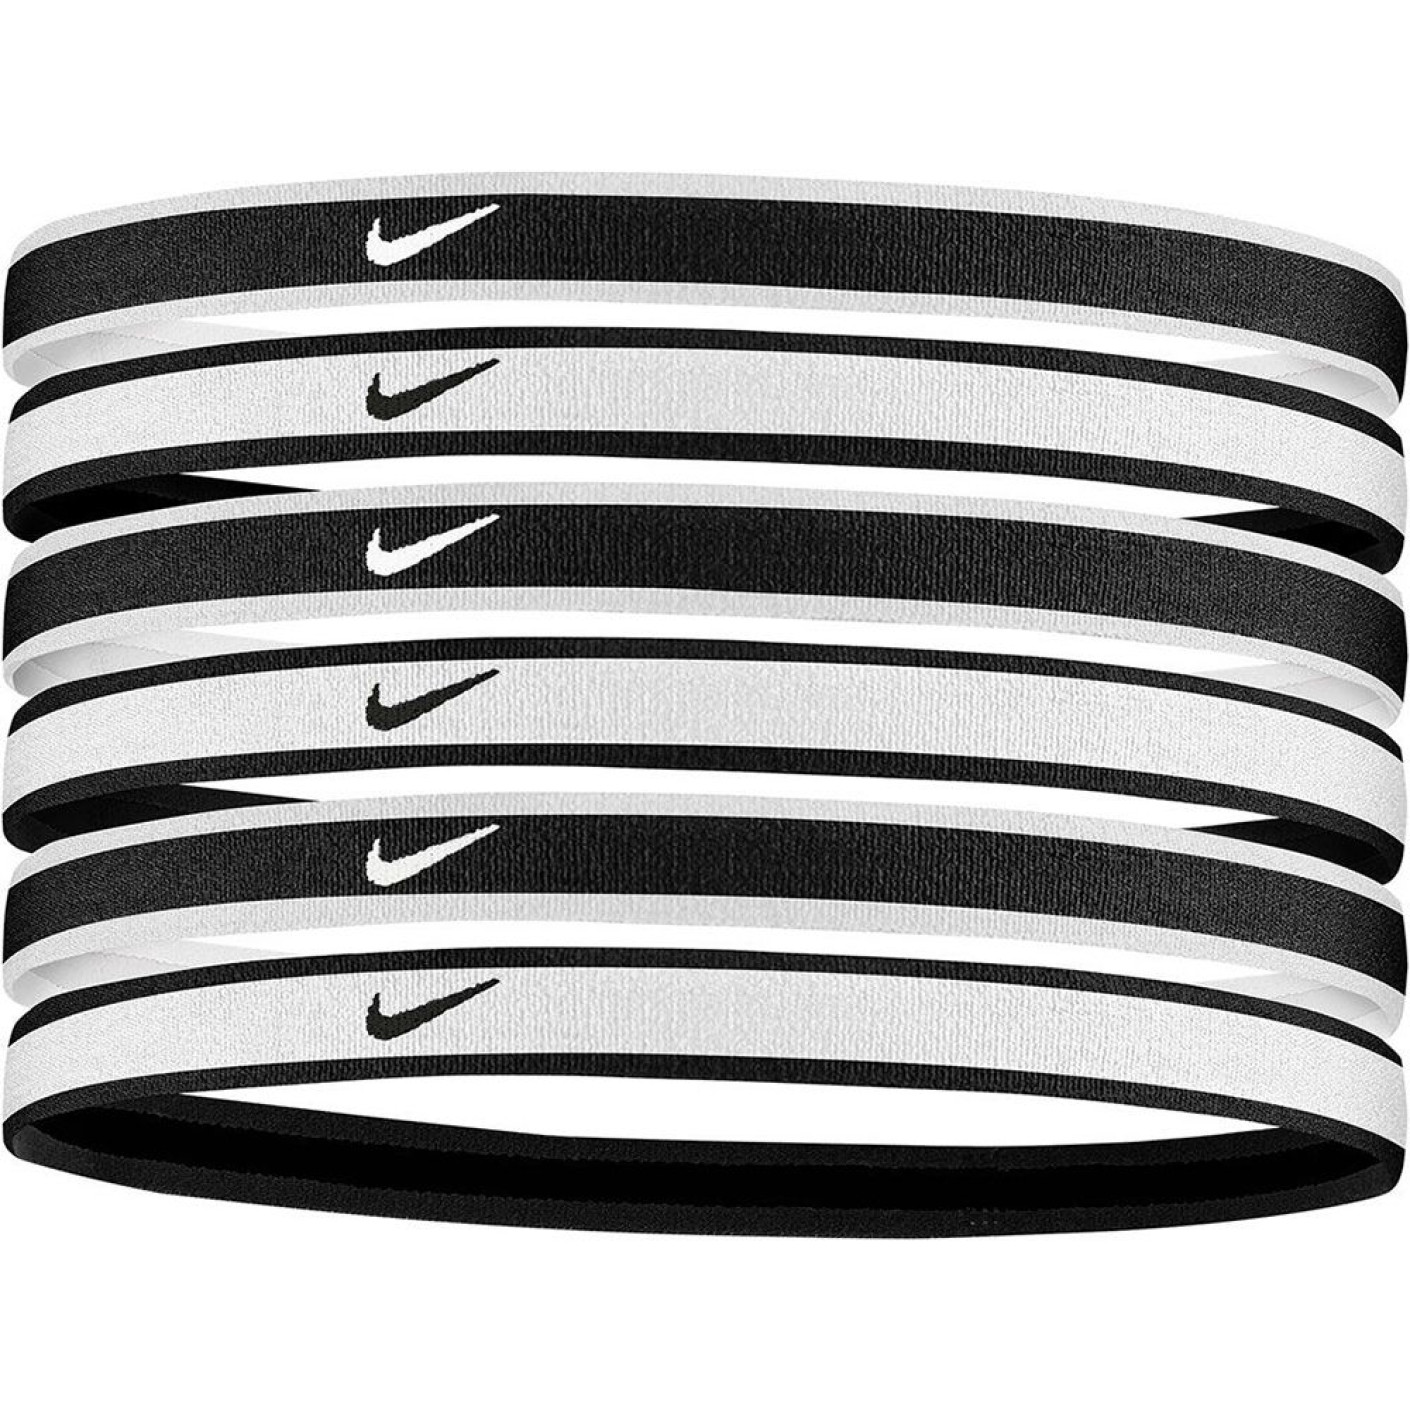 Nike - Bandeau - Blanc